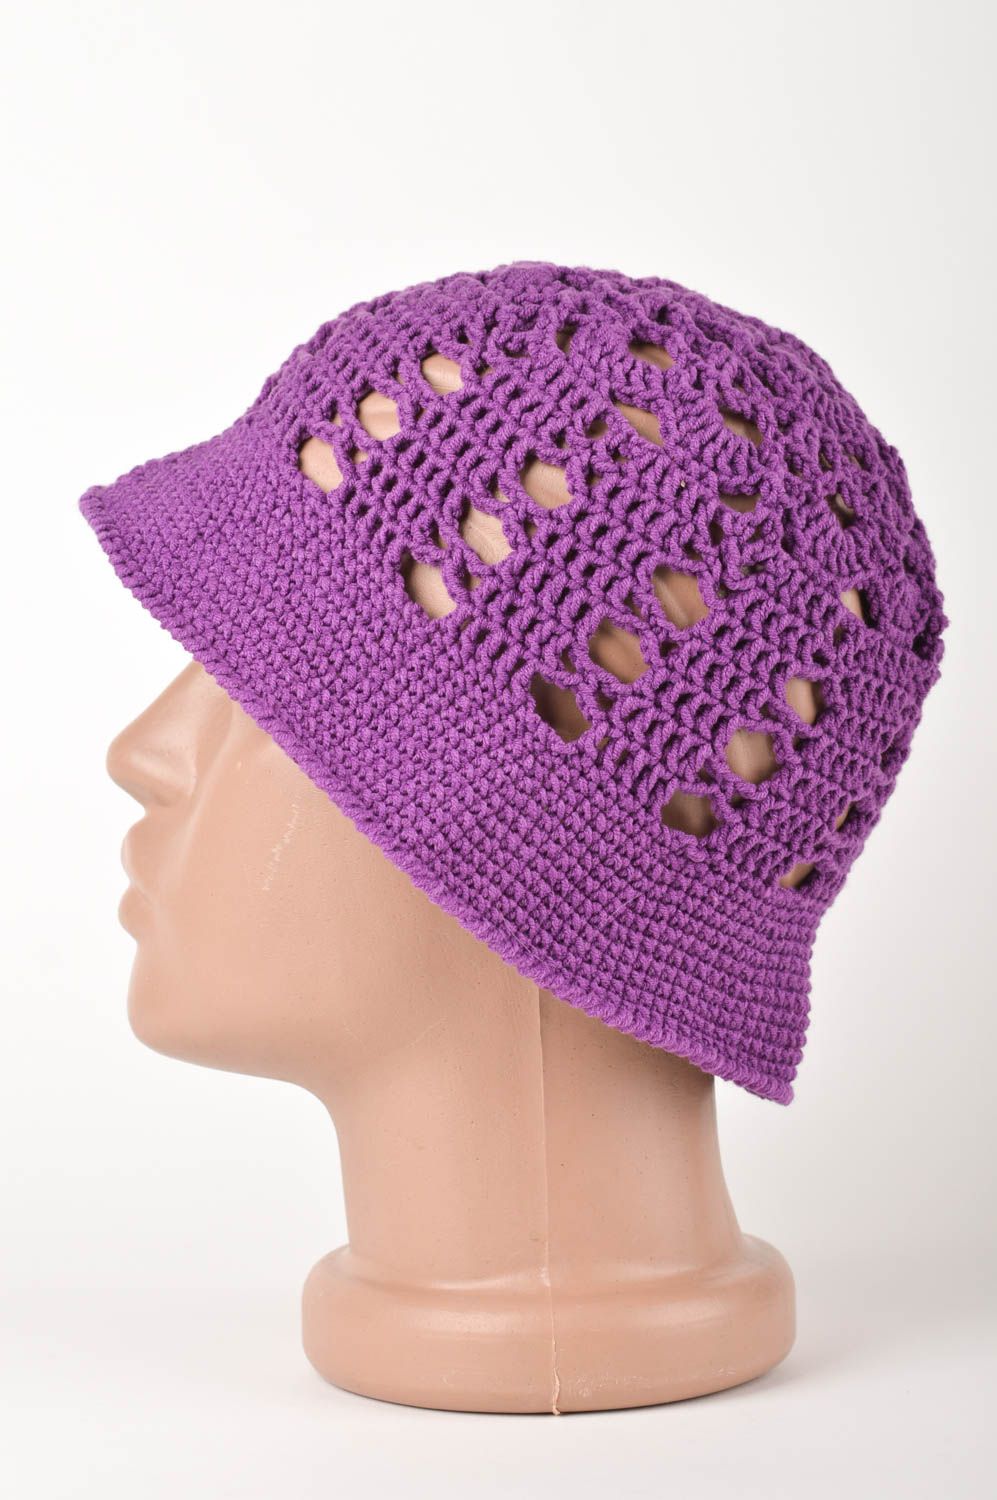 Handmade crocheted hat for girls unusual children headwear stylish summer hat photo 3